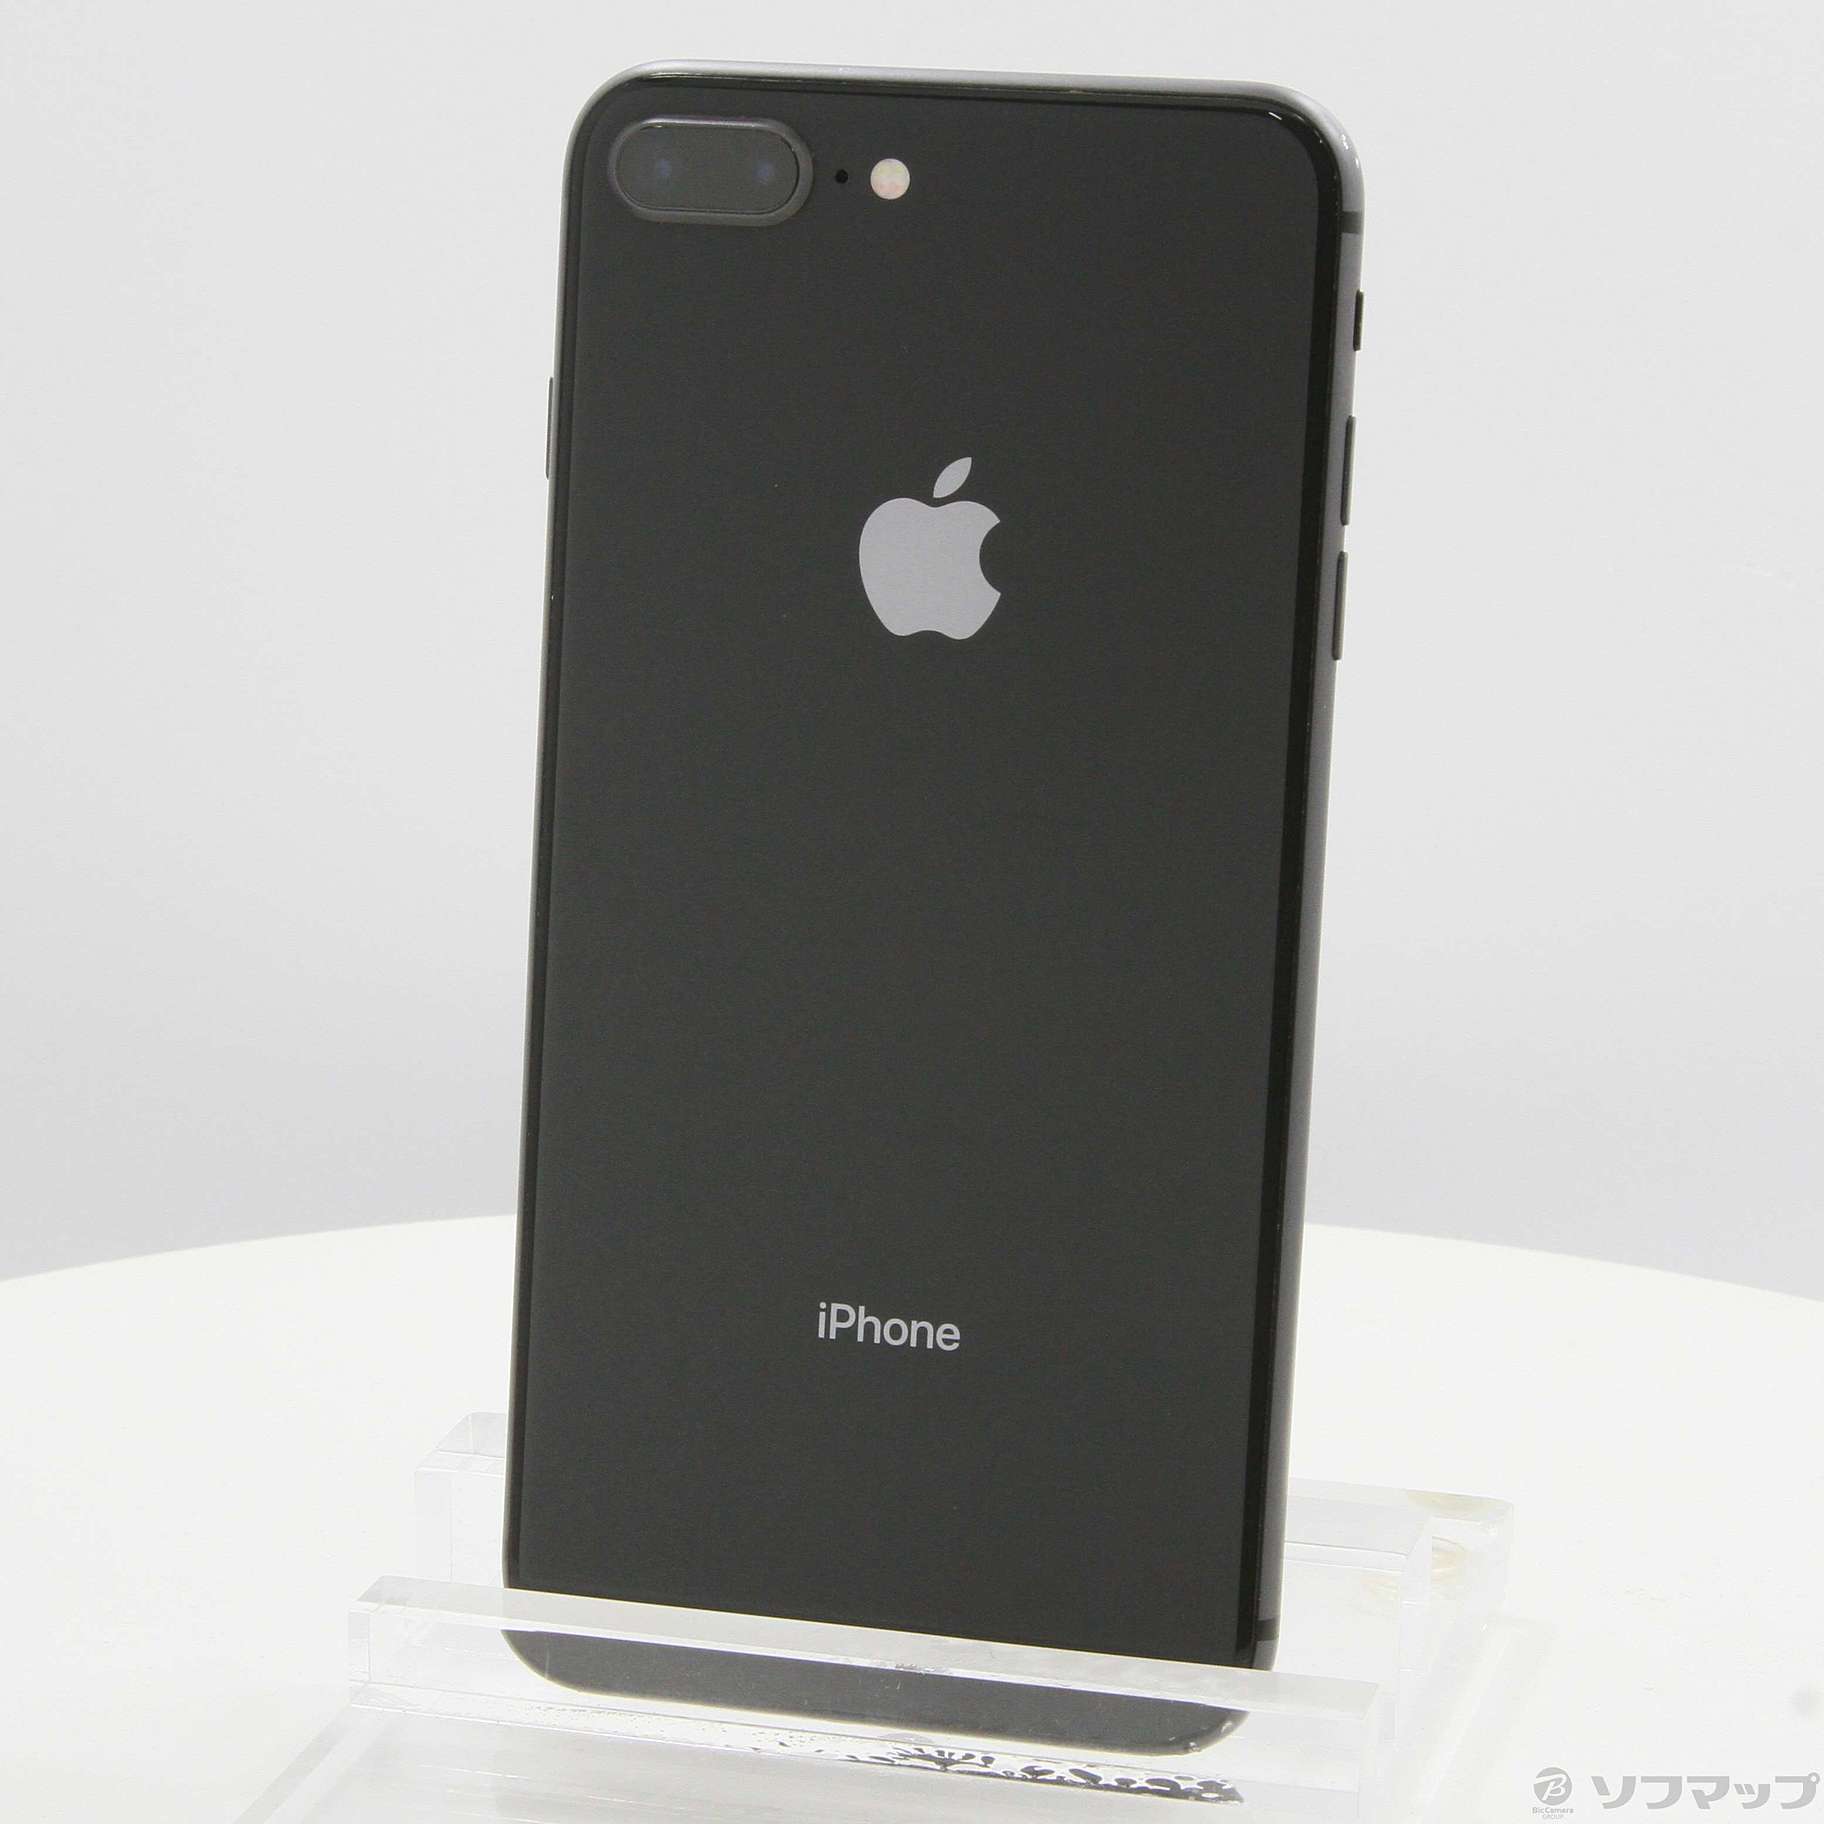 iPhone 8 Plus スペースグレー 64GB SIMフリー 新しい季節 